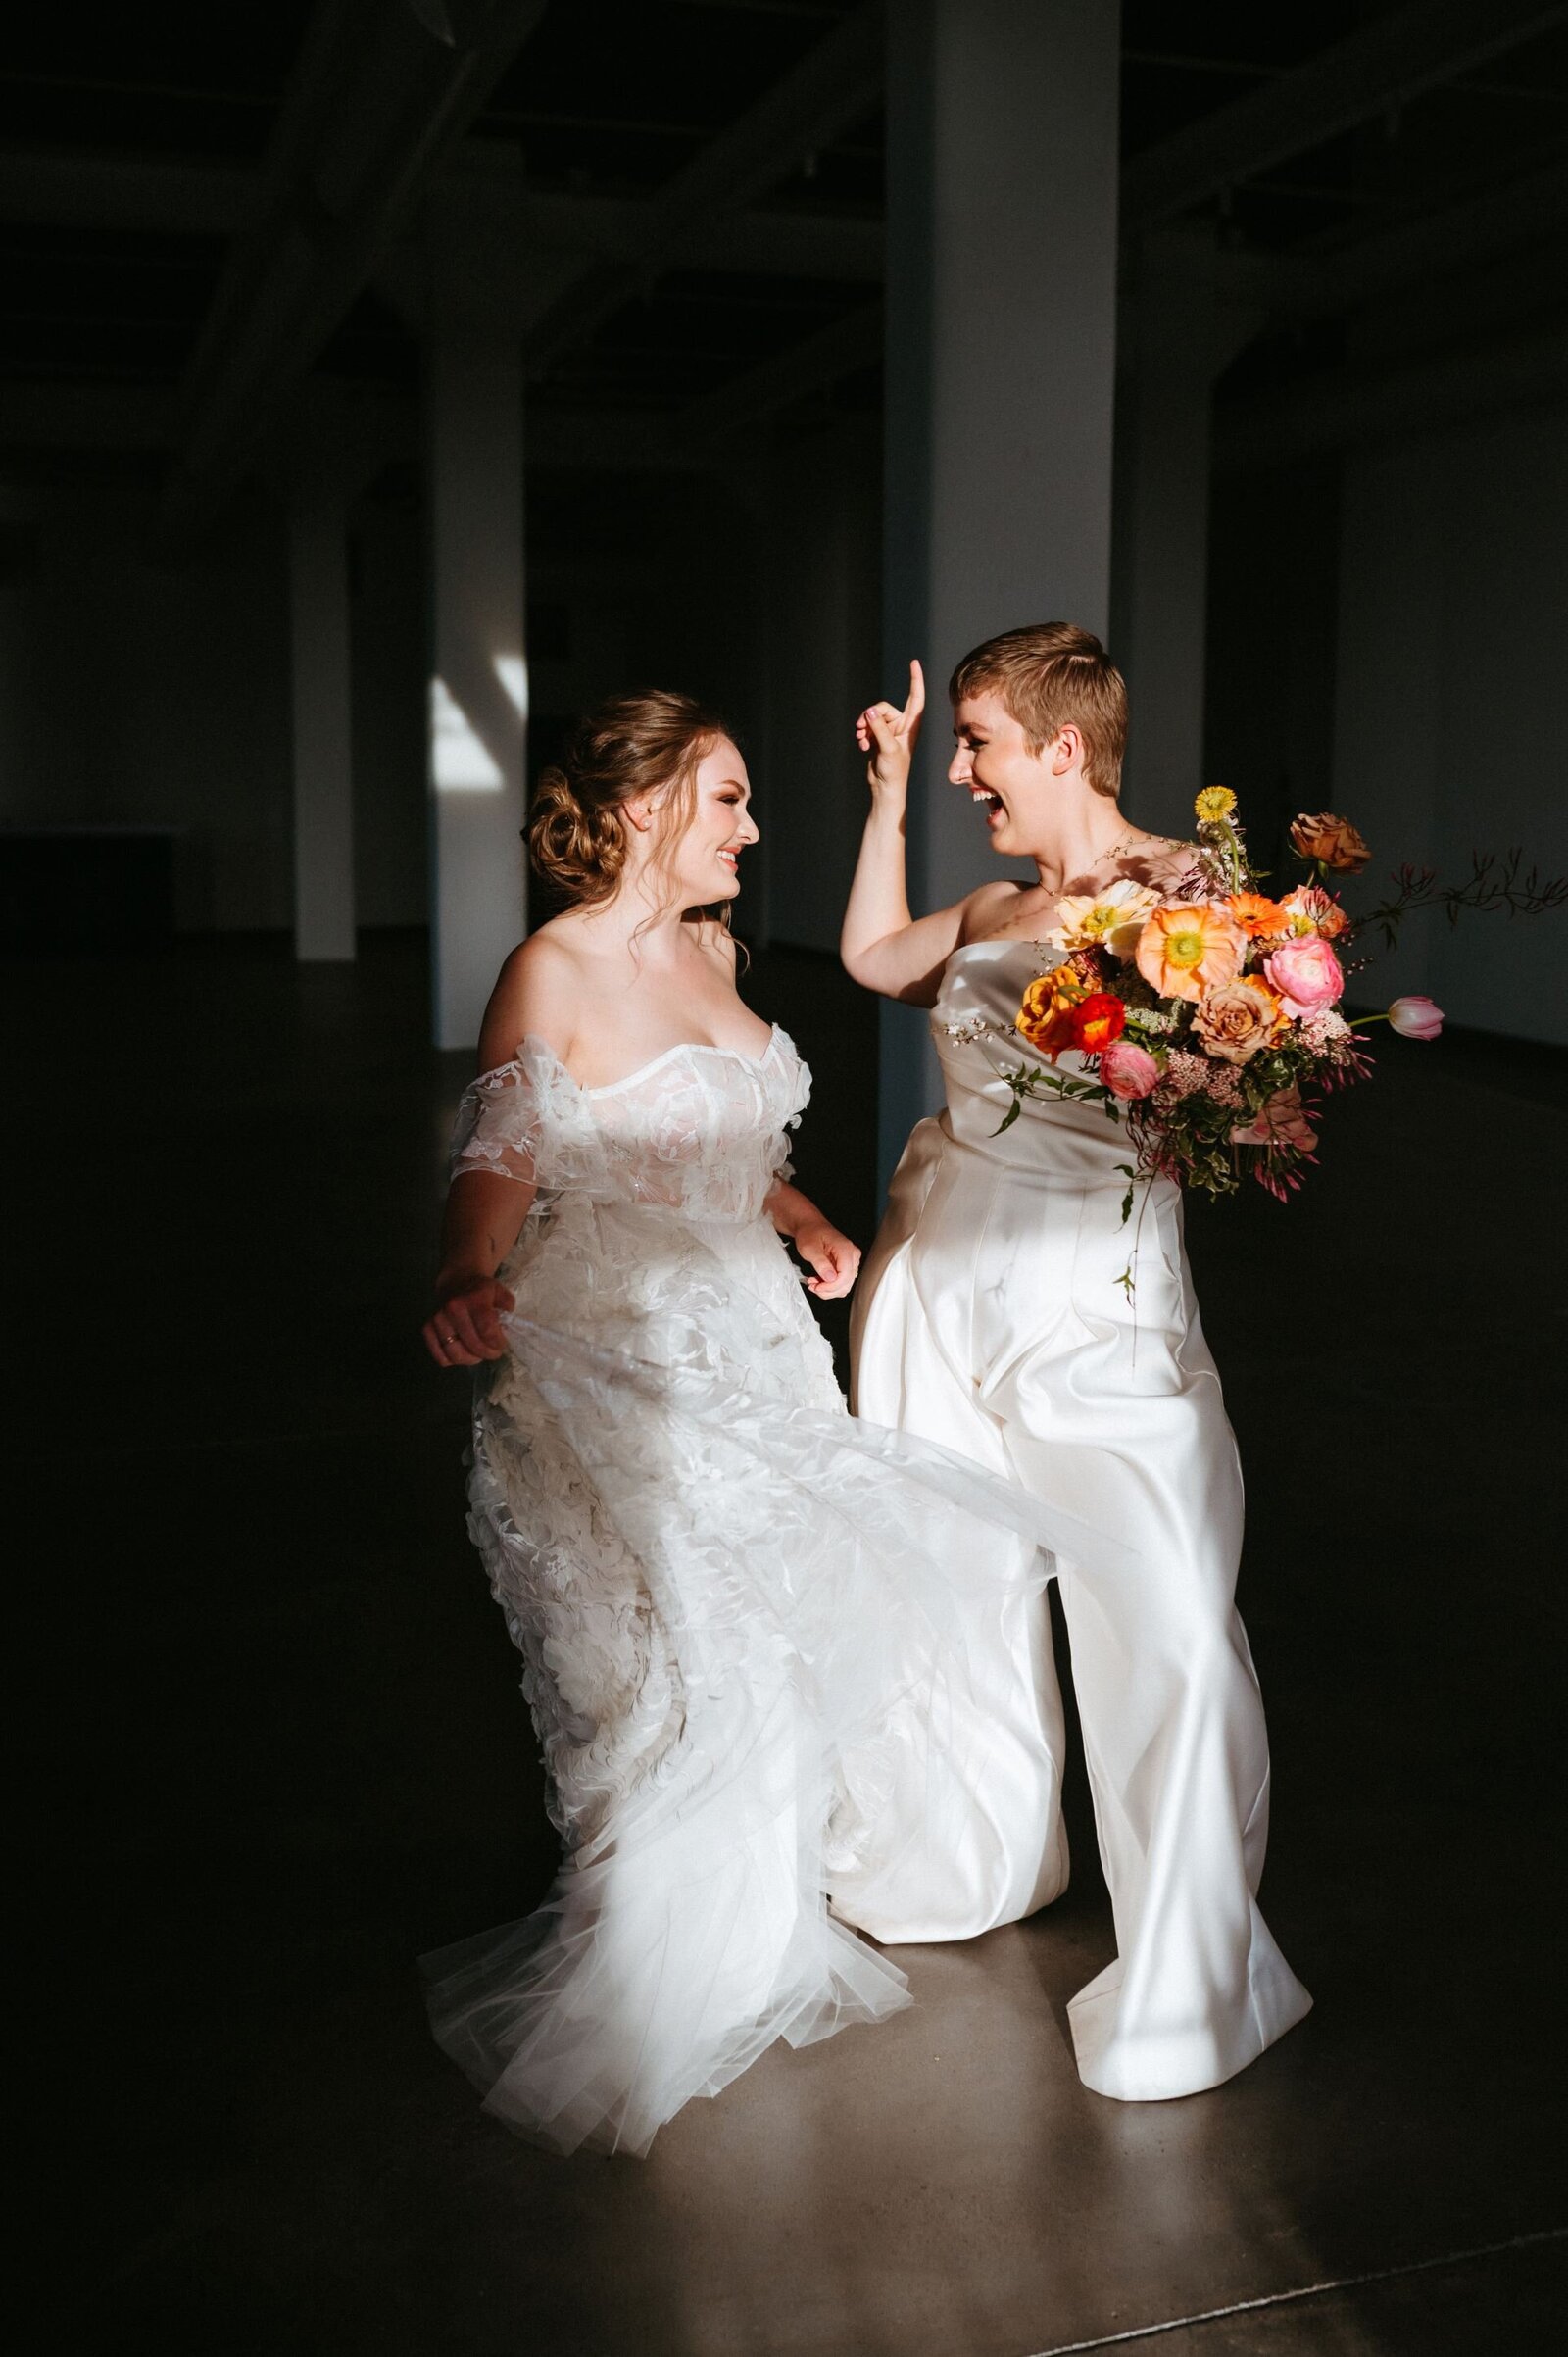 marissa-kelly-photography-destination-wedding-photographer-chicago-newyork-worldwide-rebrand-7